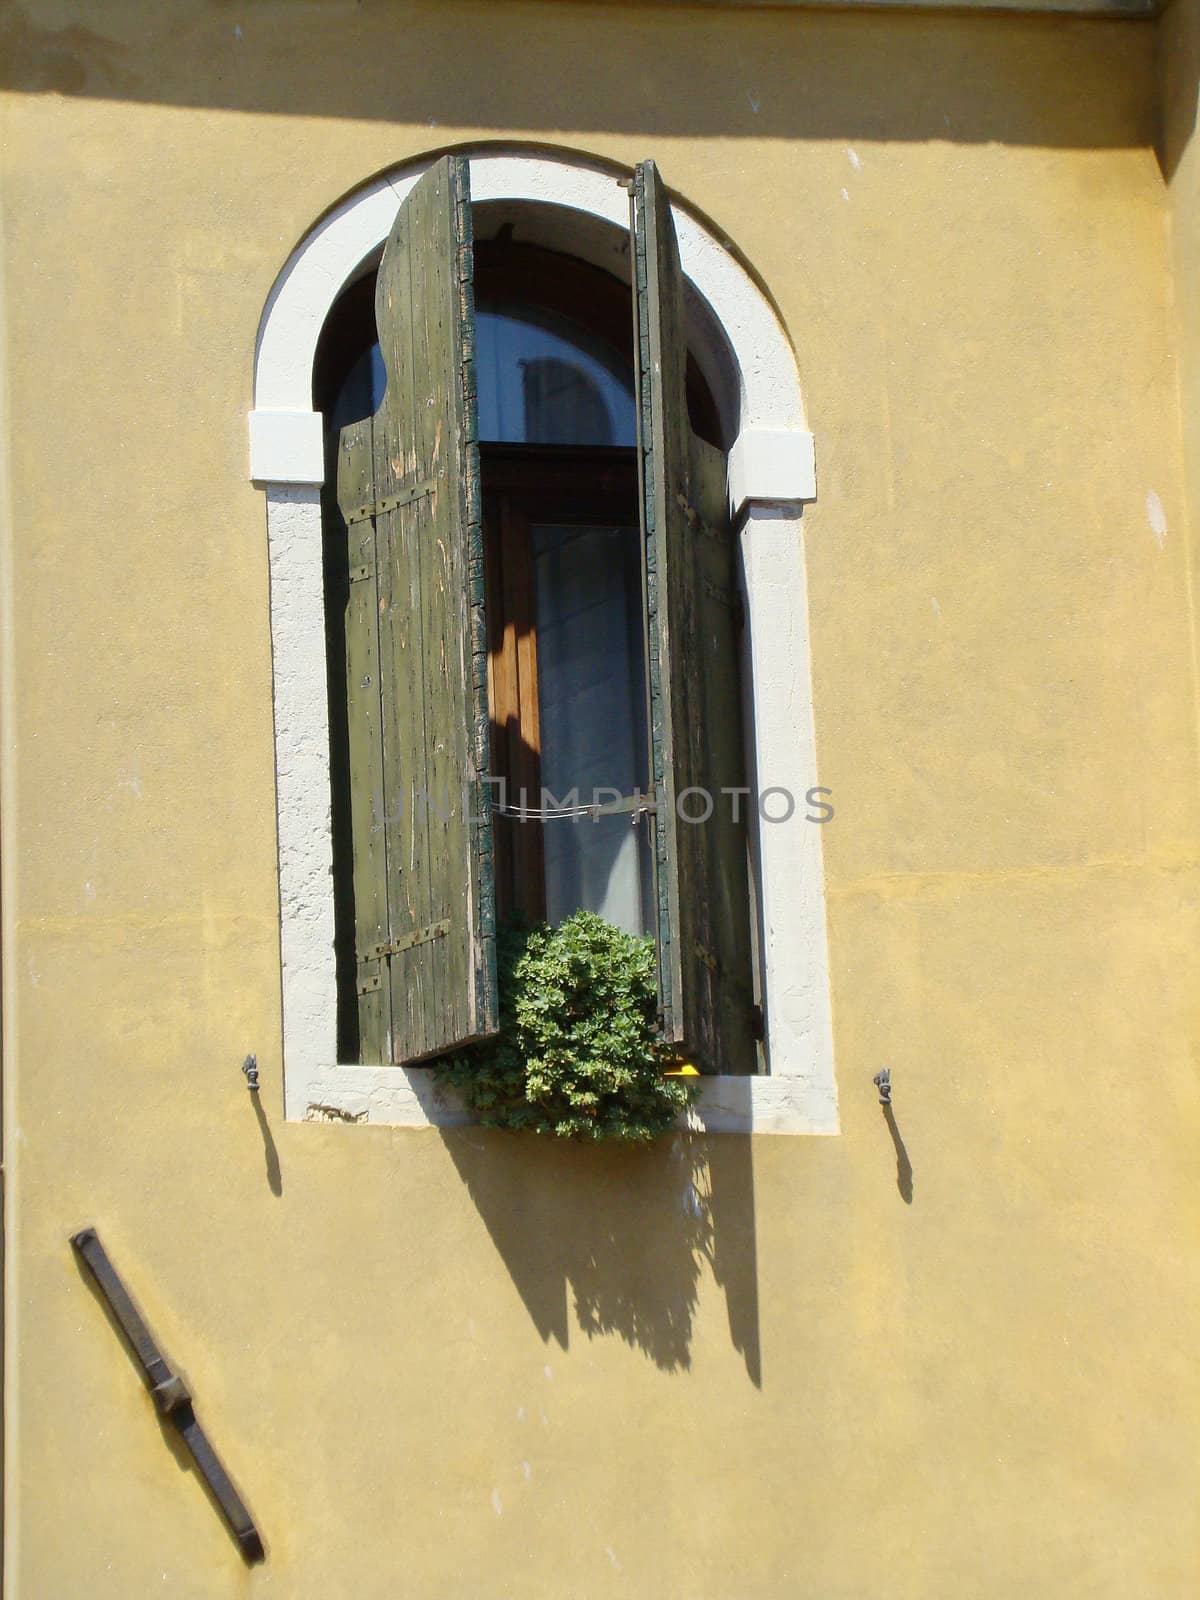 	
window in Venice,Italy